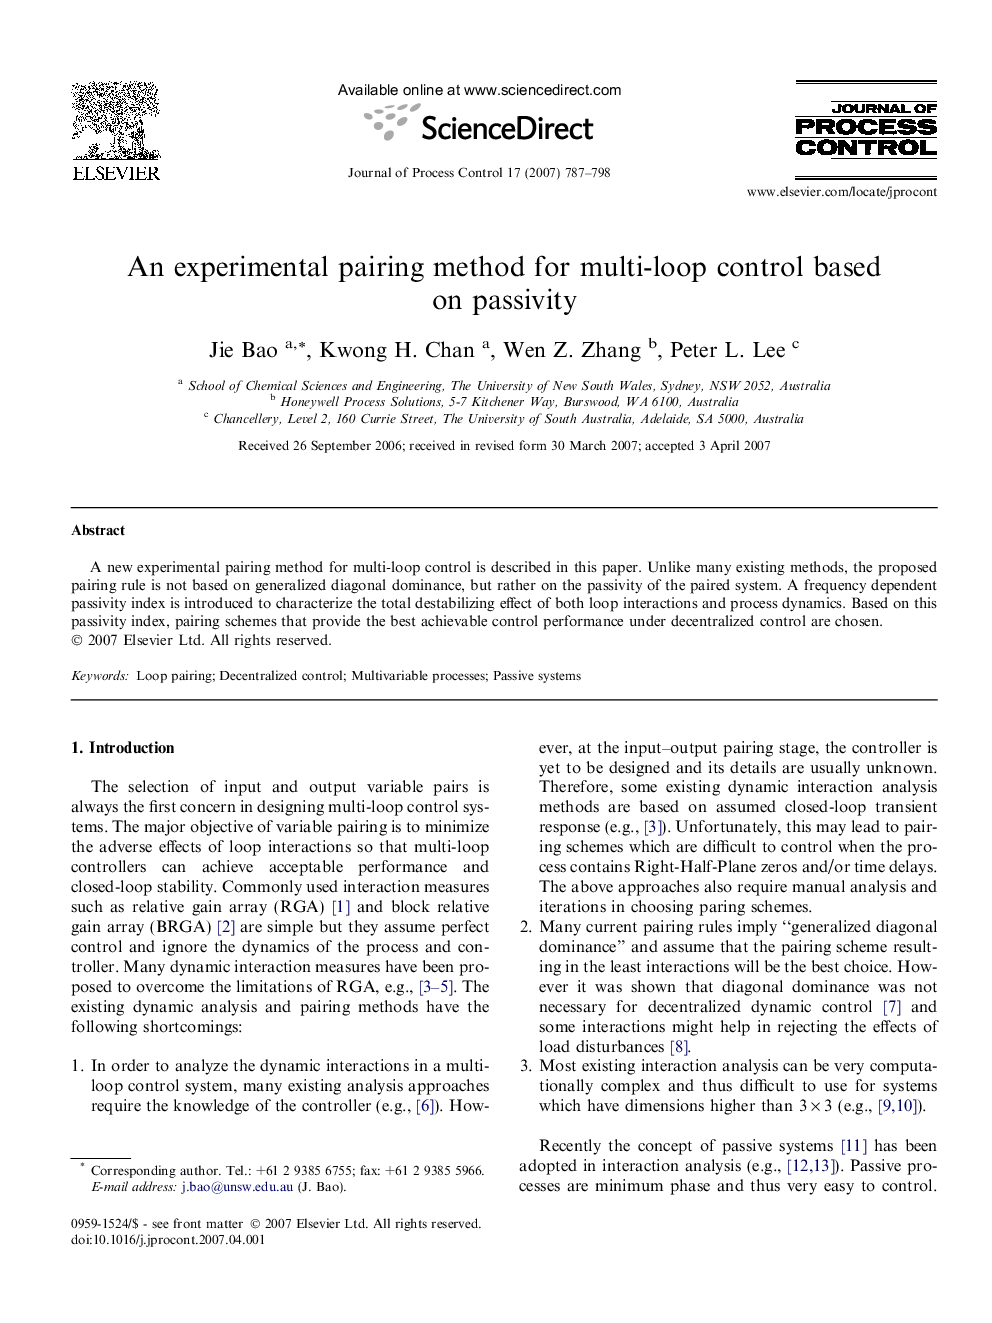 An experimental pairing method for multi-loop control based on passivity